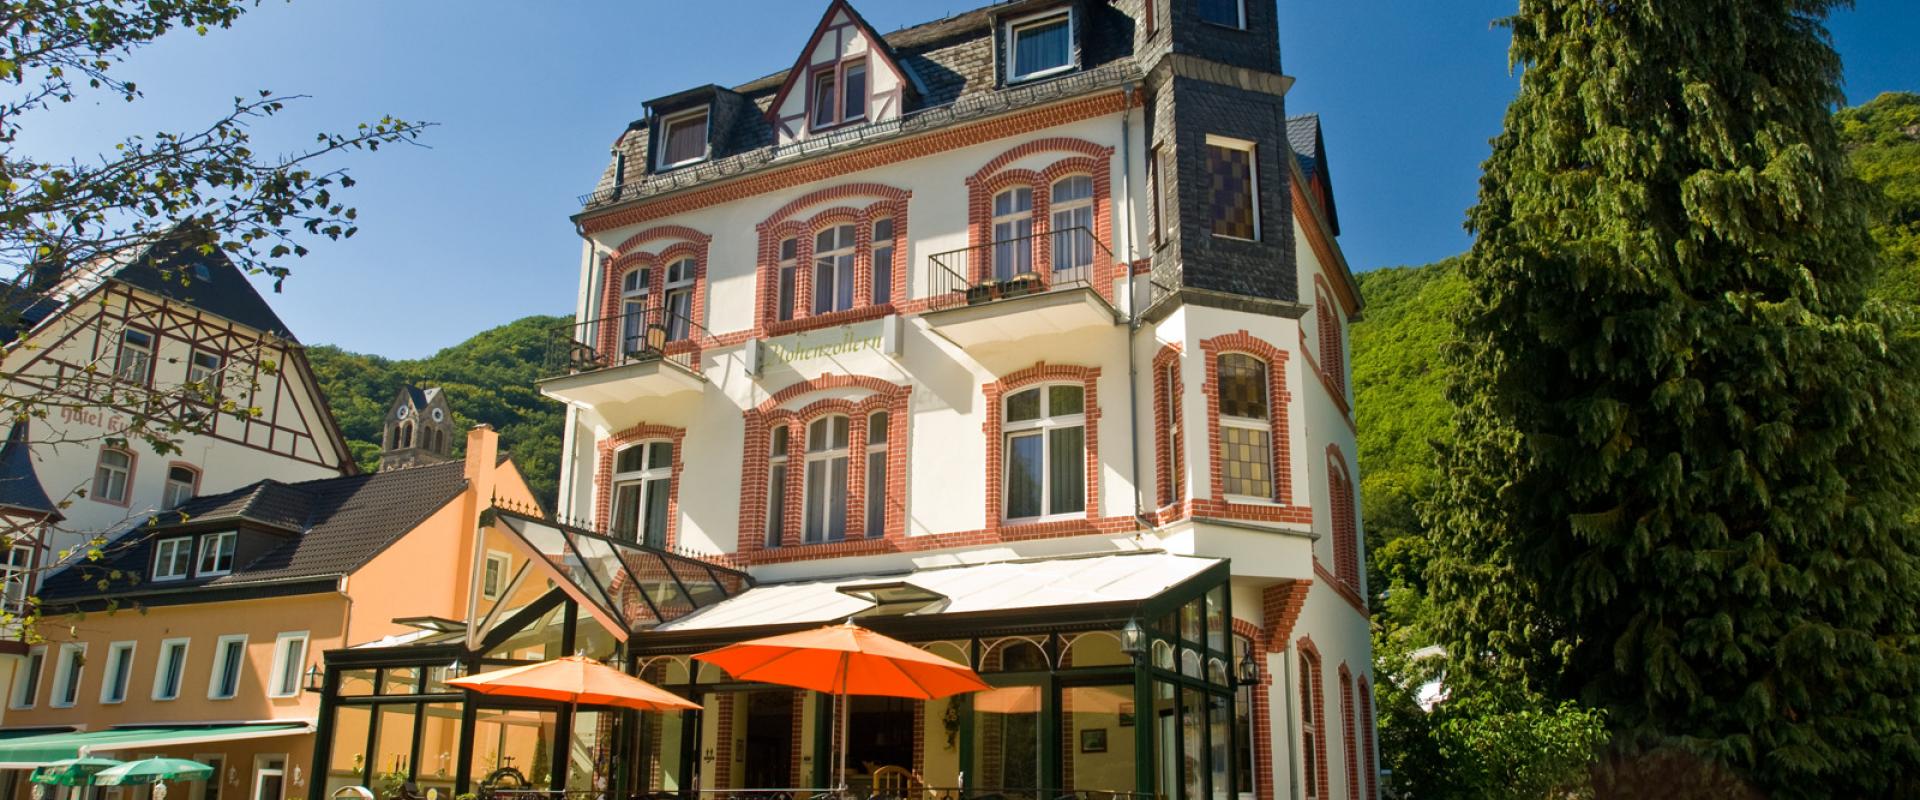 21119 Motorrad Hotel Hohenzollern an der Mosel.jpeg